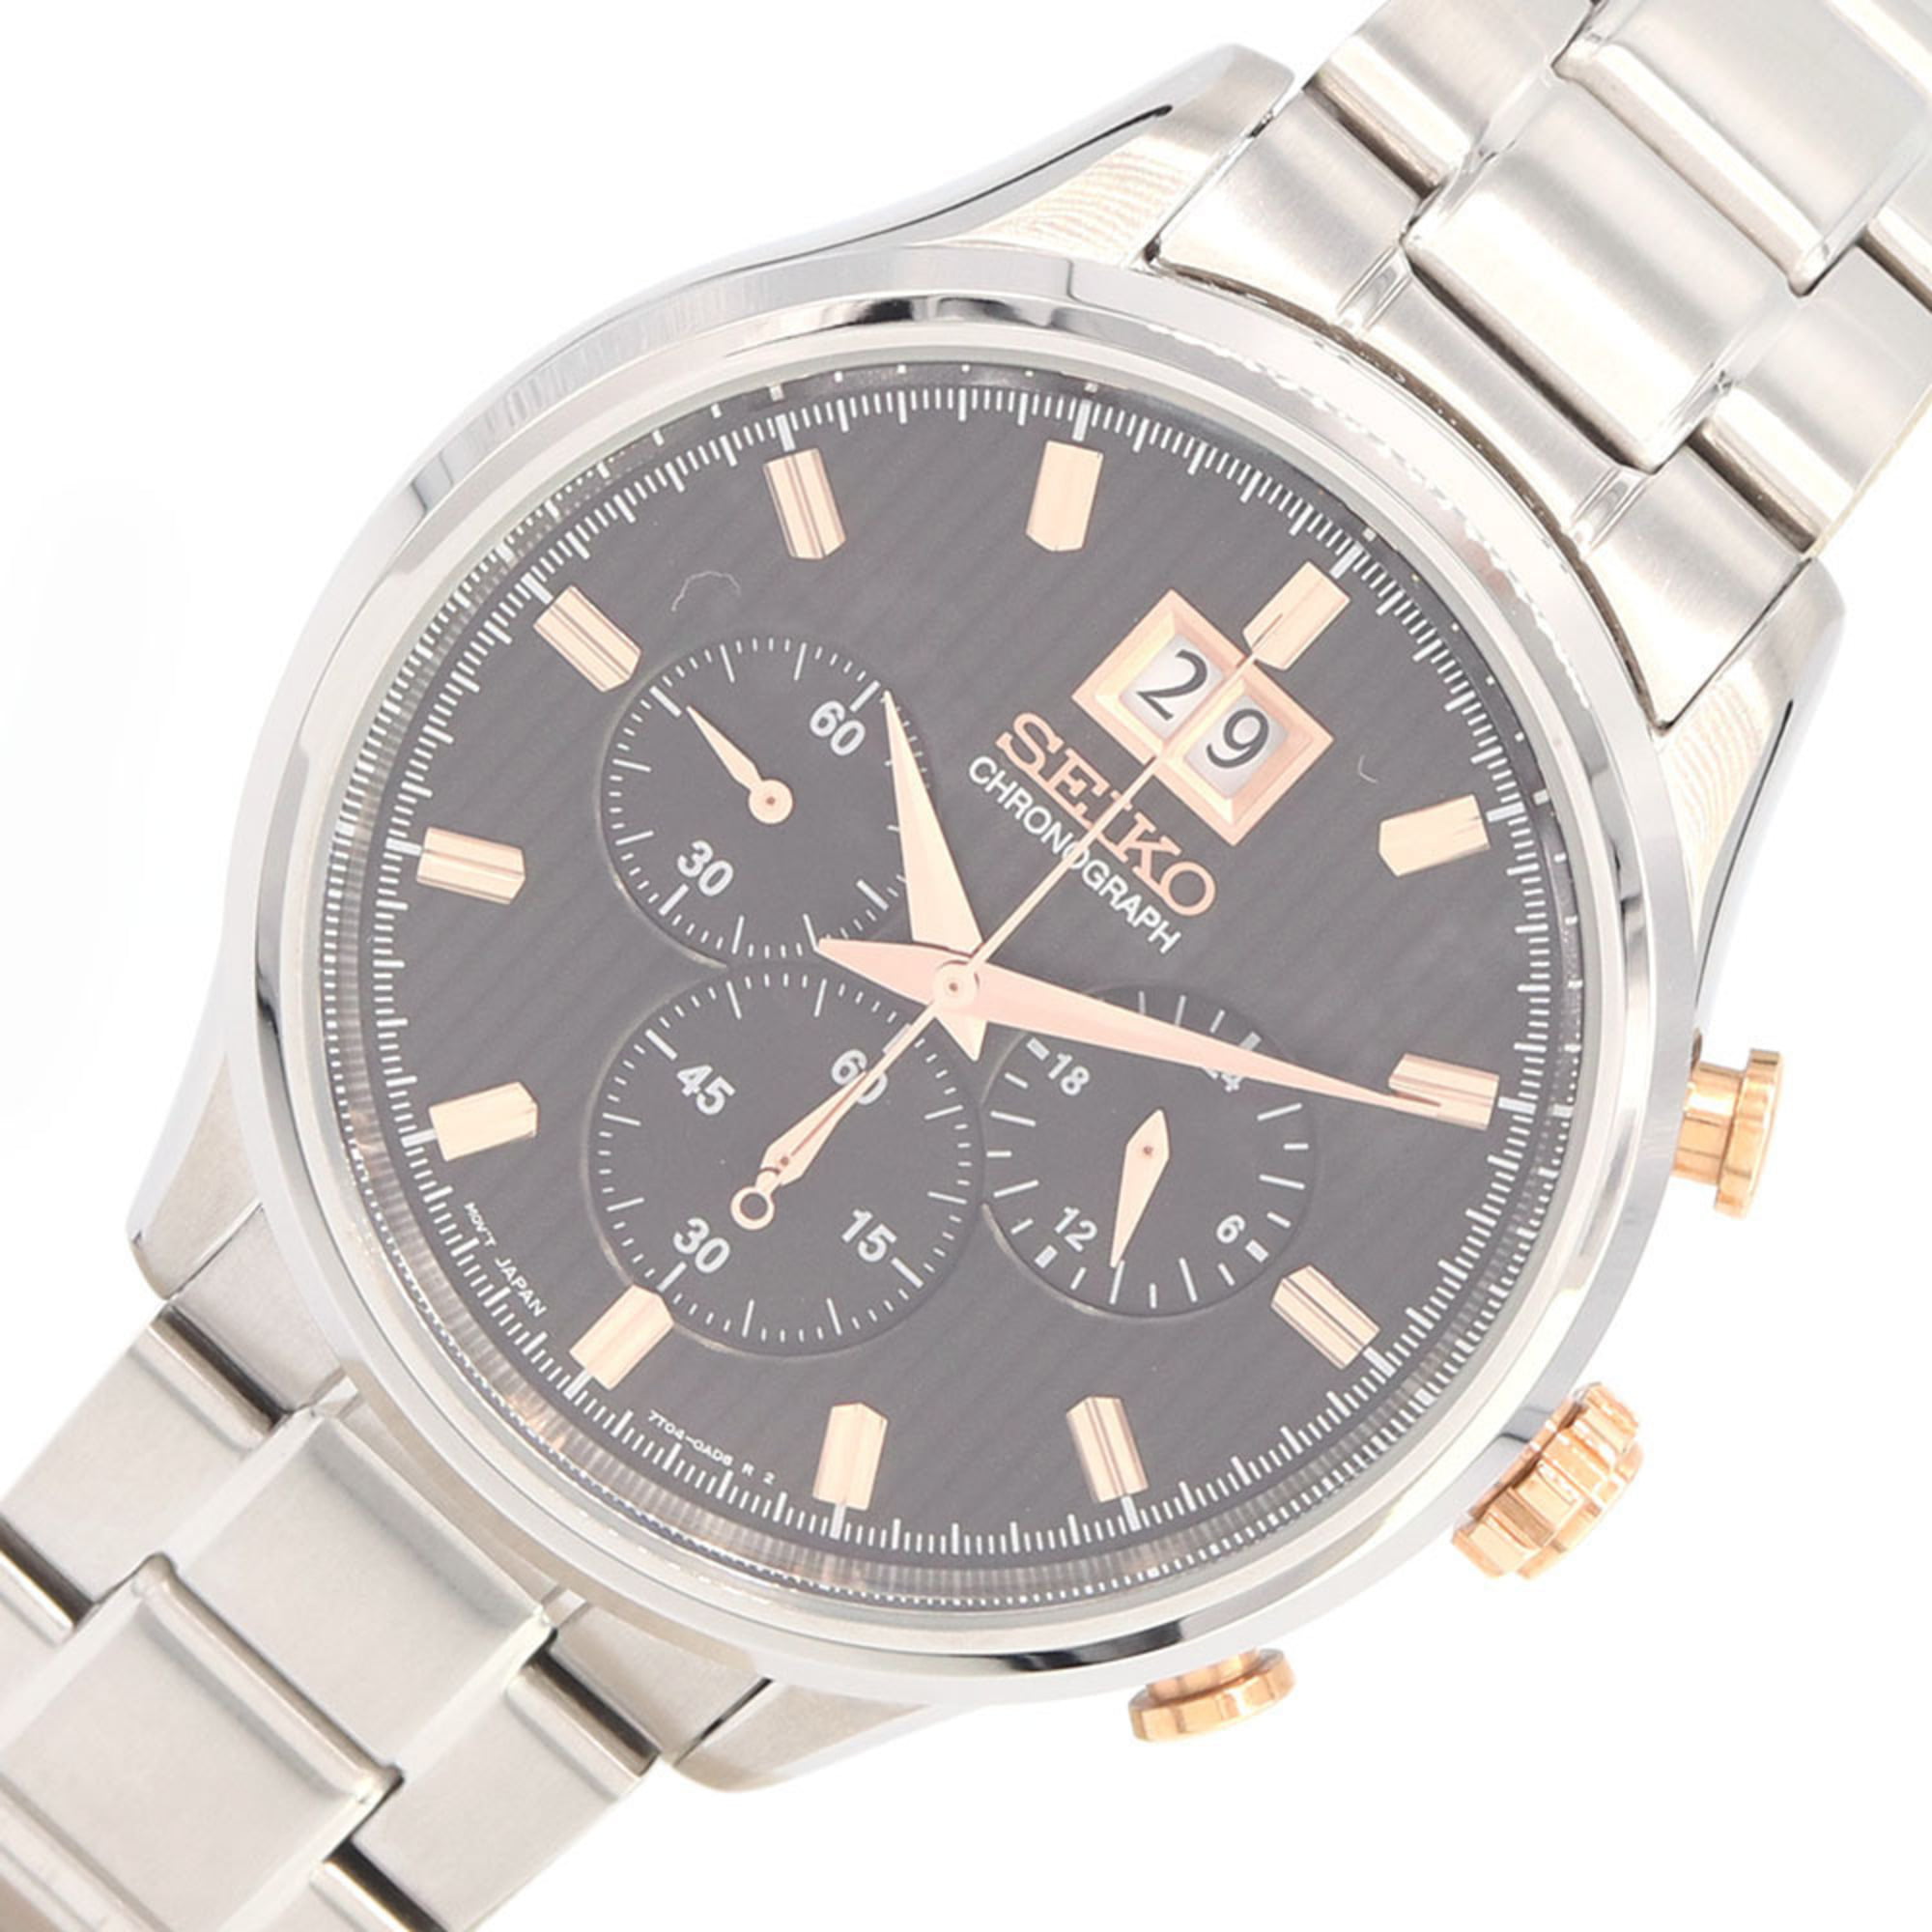 Authenticated Used SEIKO men's watch overseas model big date chronograph  SPC151P1 dark gray dial bar index stainless steel quartz wristwatch  business calendar 